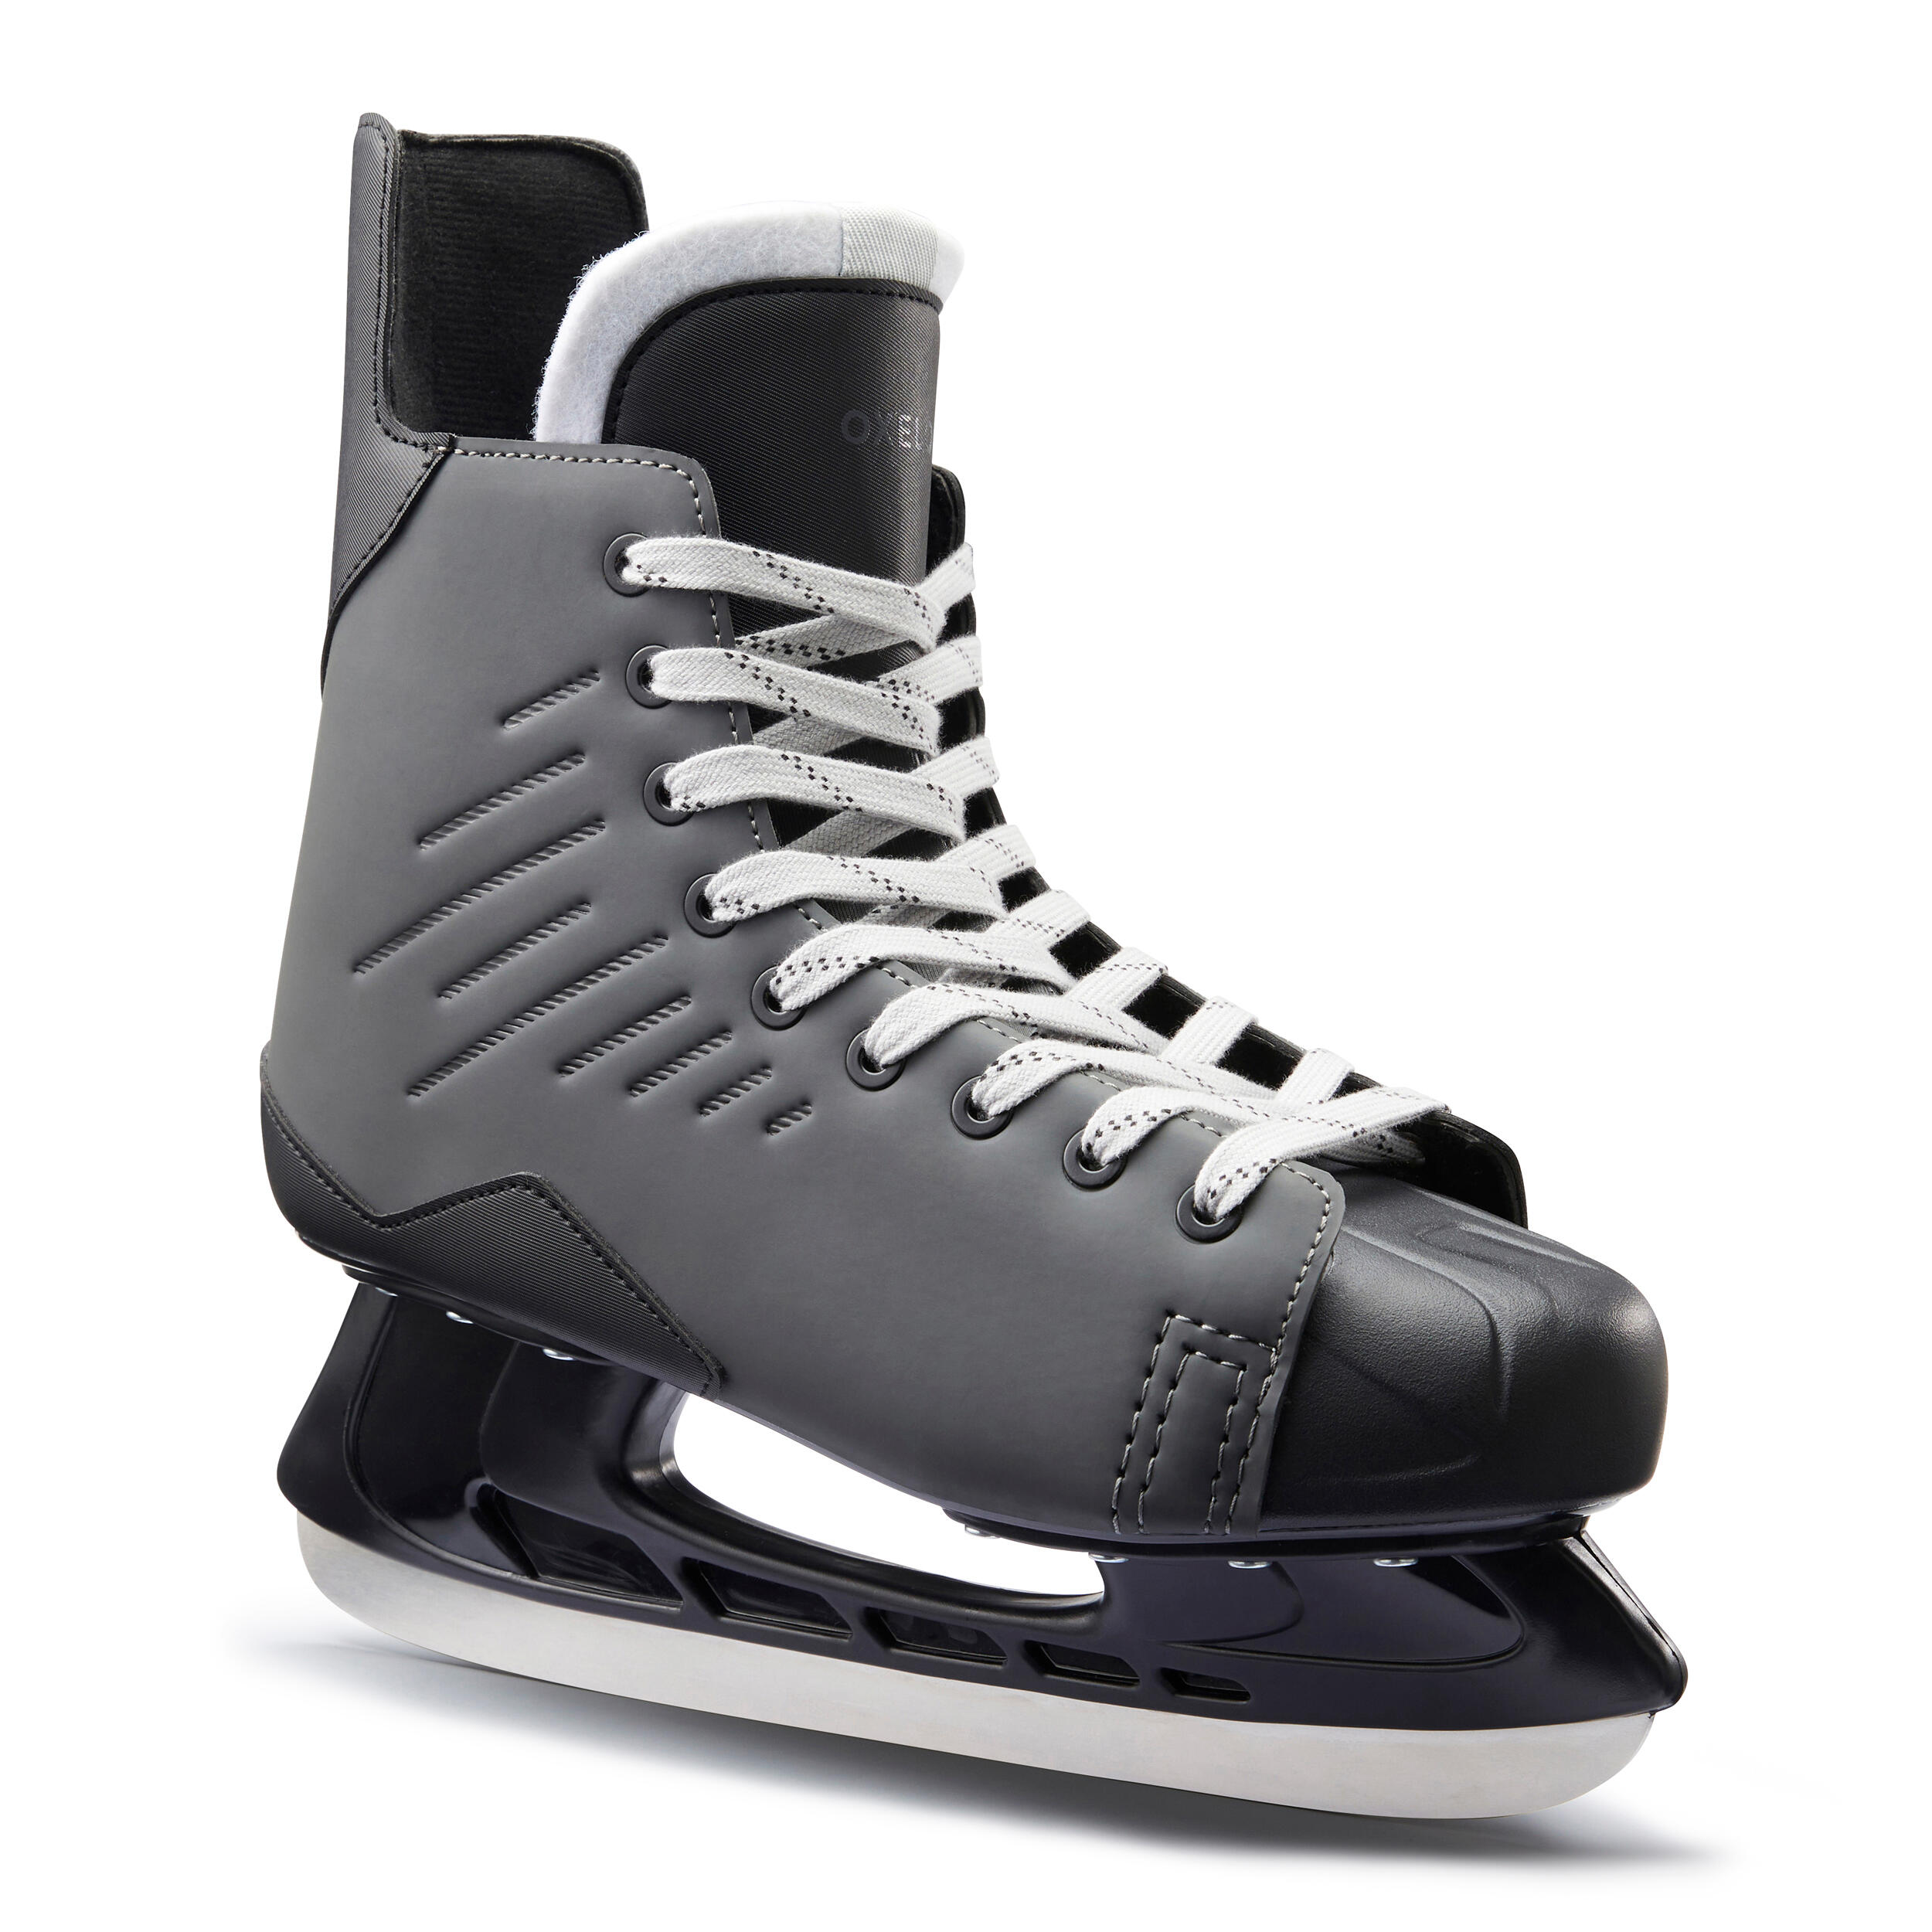 Oxelo Adult Ice Skates Hockey Look 100